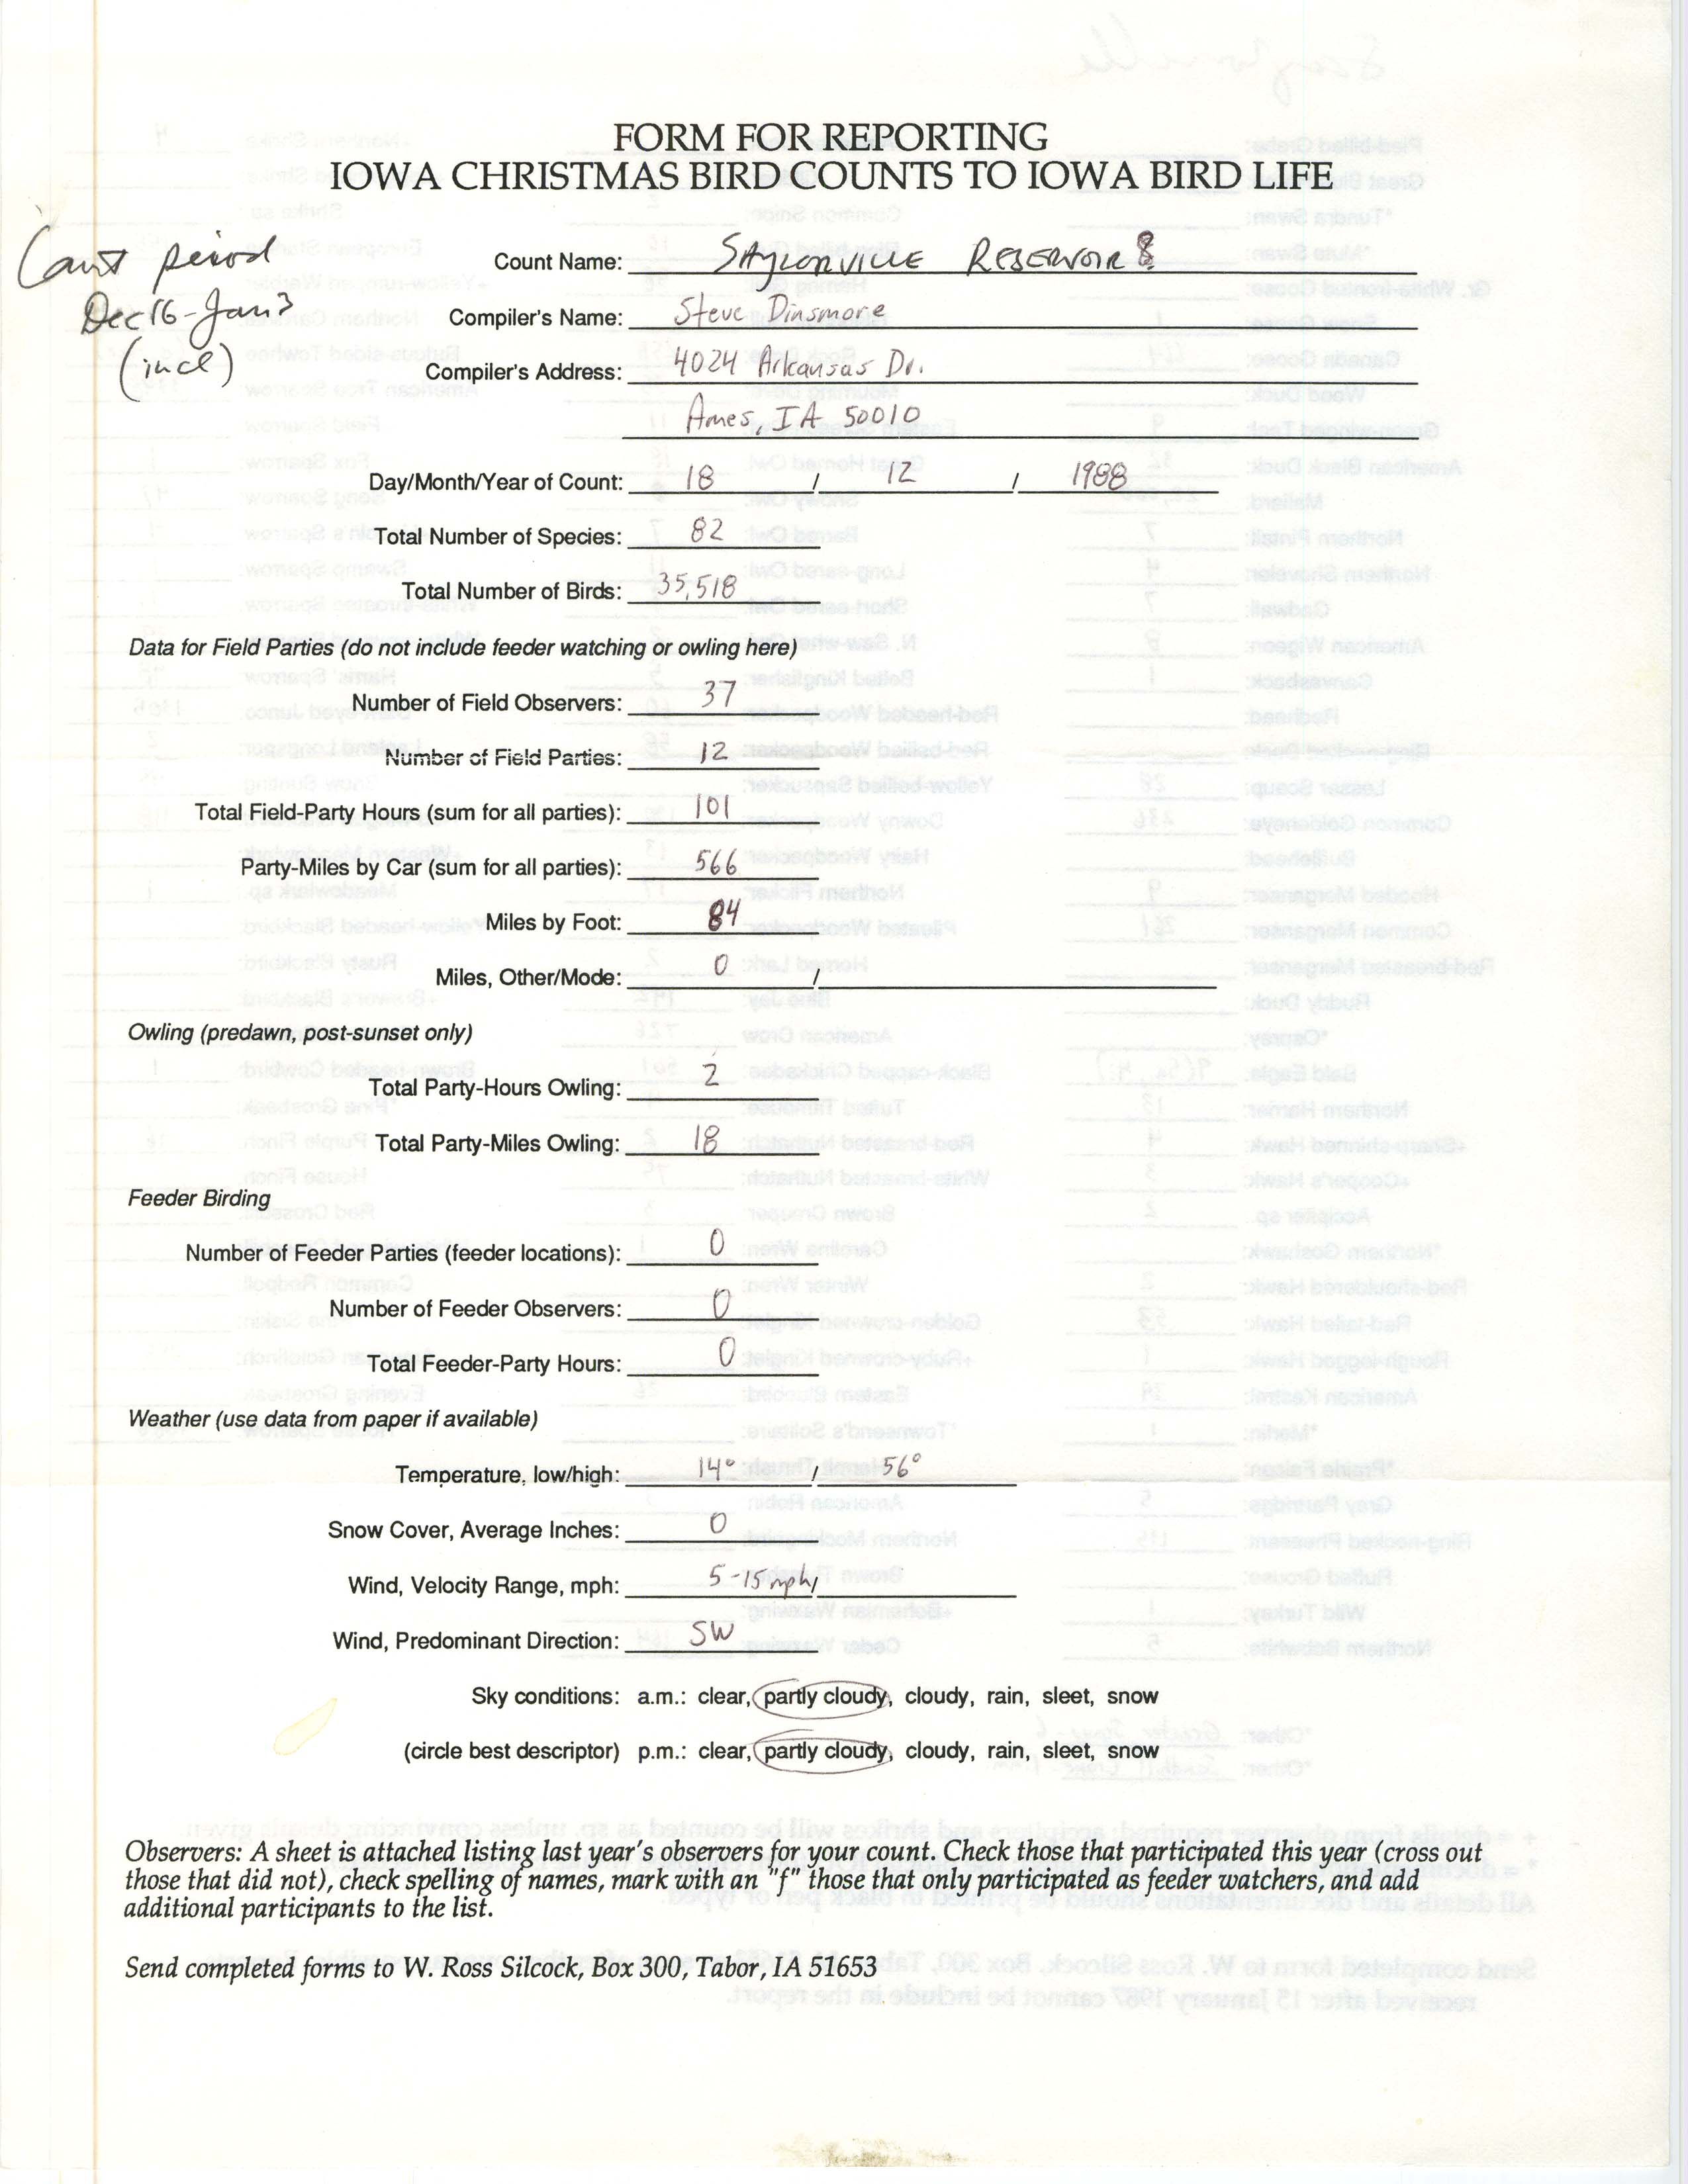 Form for reporting Iowa Christmas bird counts to Iowa Bird Life, Stephen J. Dinsmore, December 18, 1988